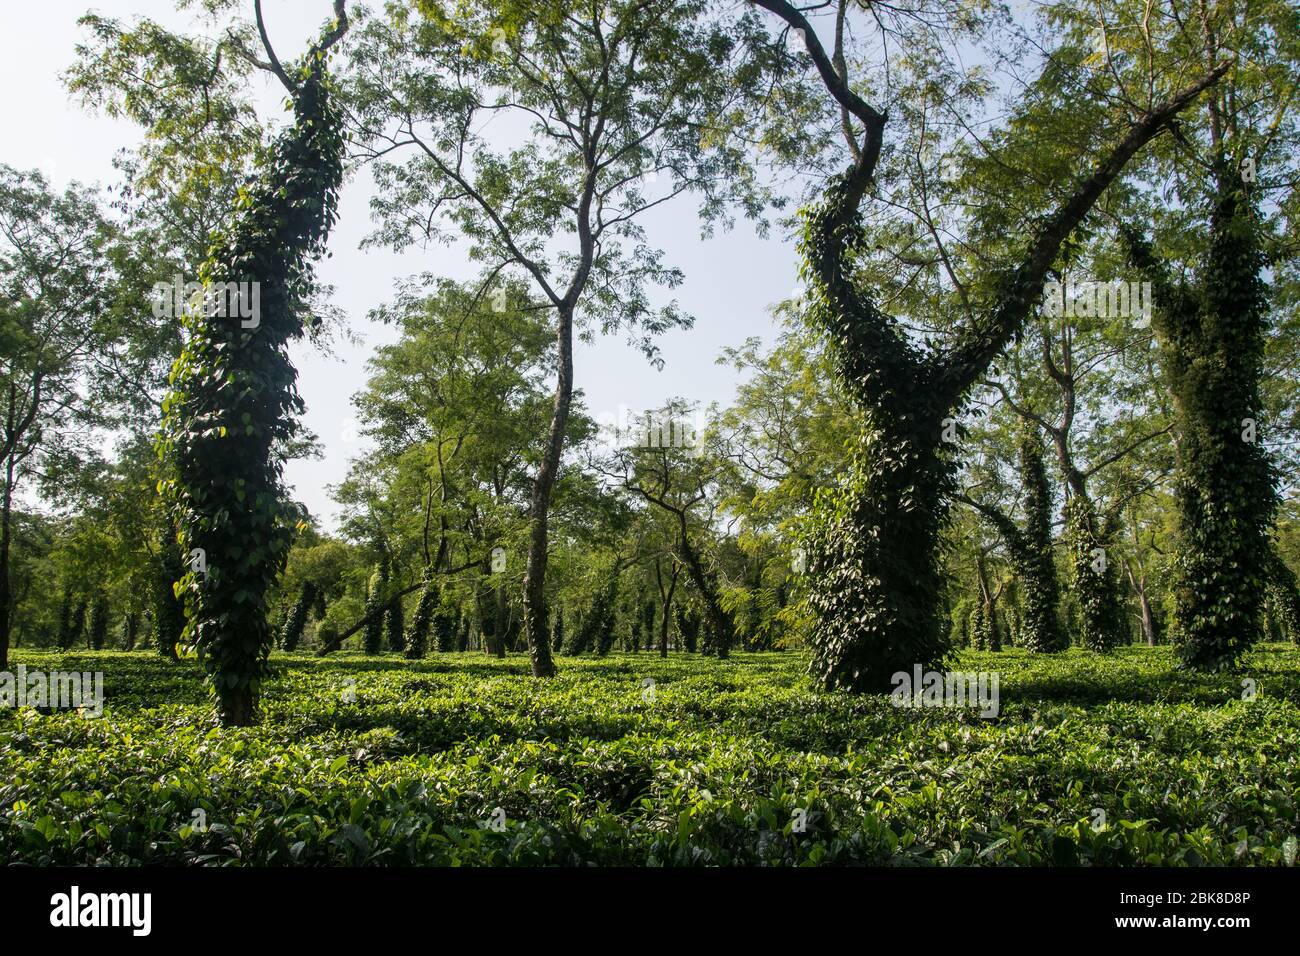 Typical tea plantation in Assam near Kaziranga National Park Stock Photo